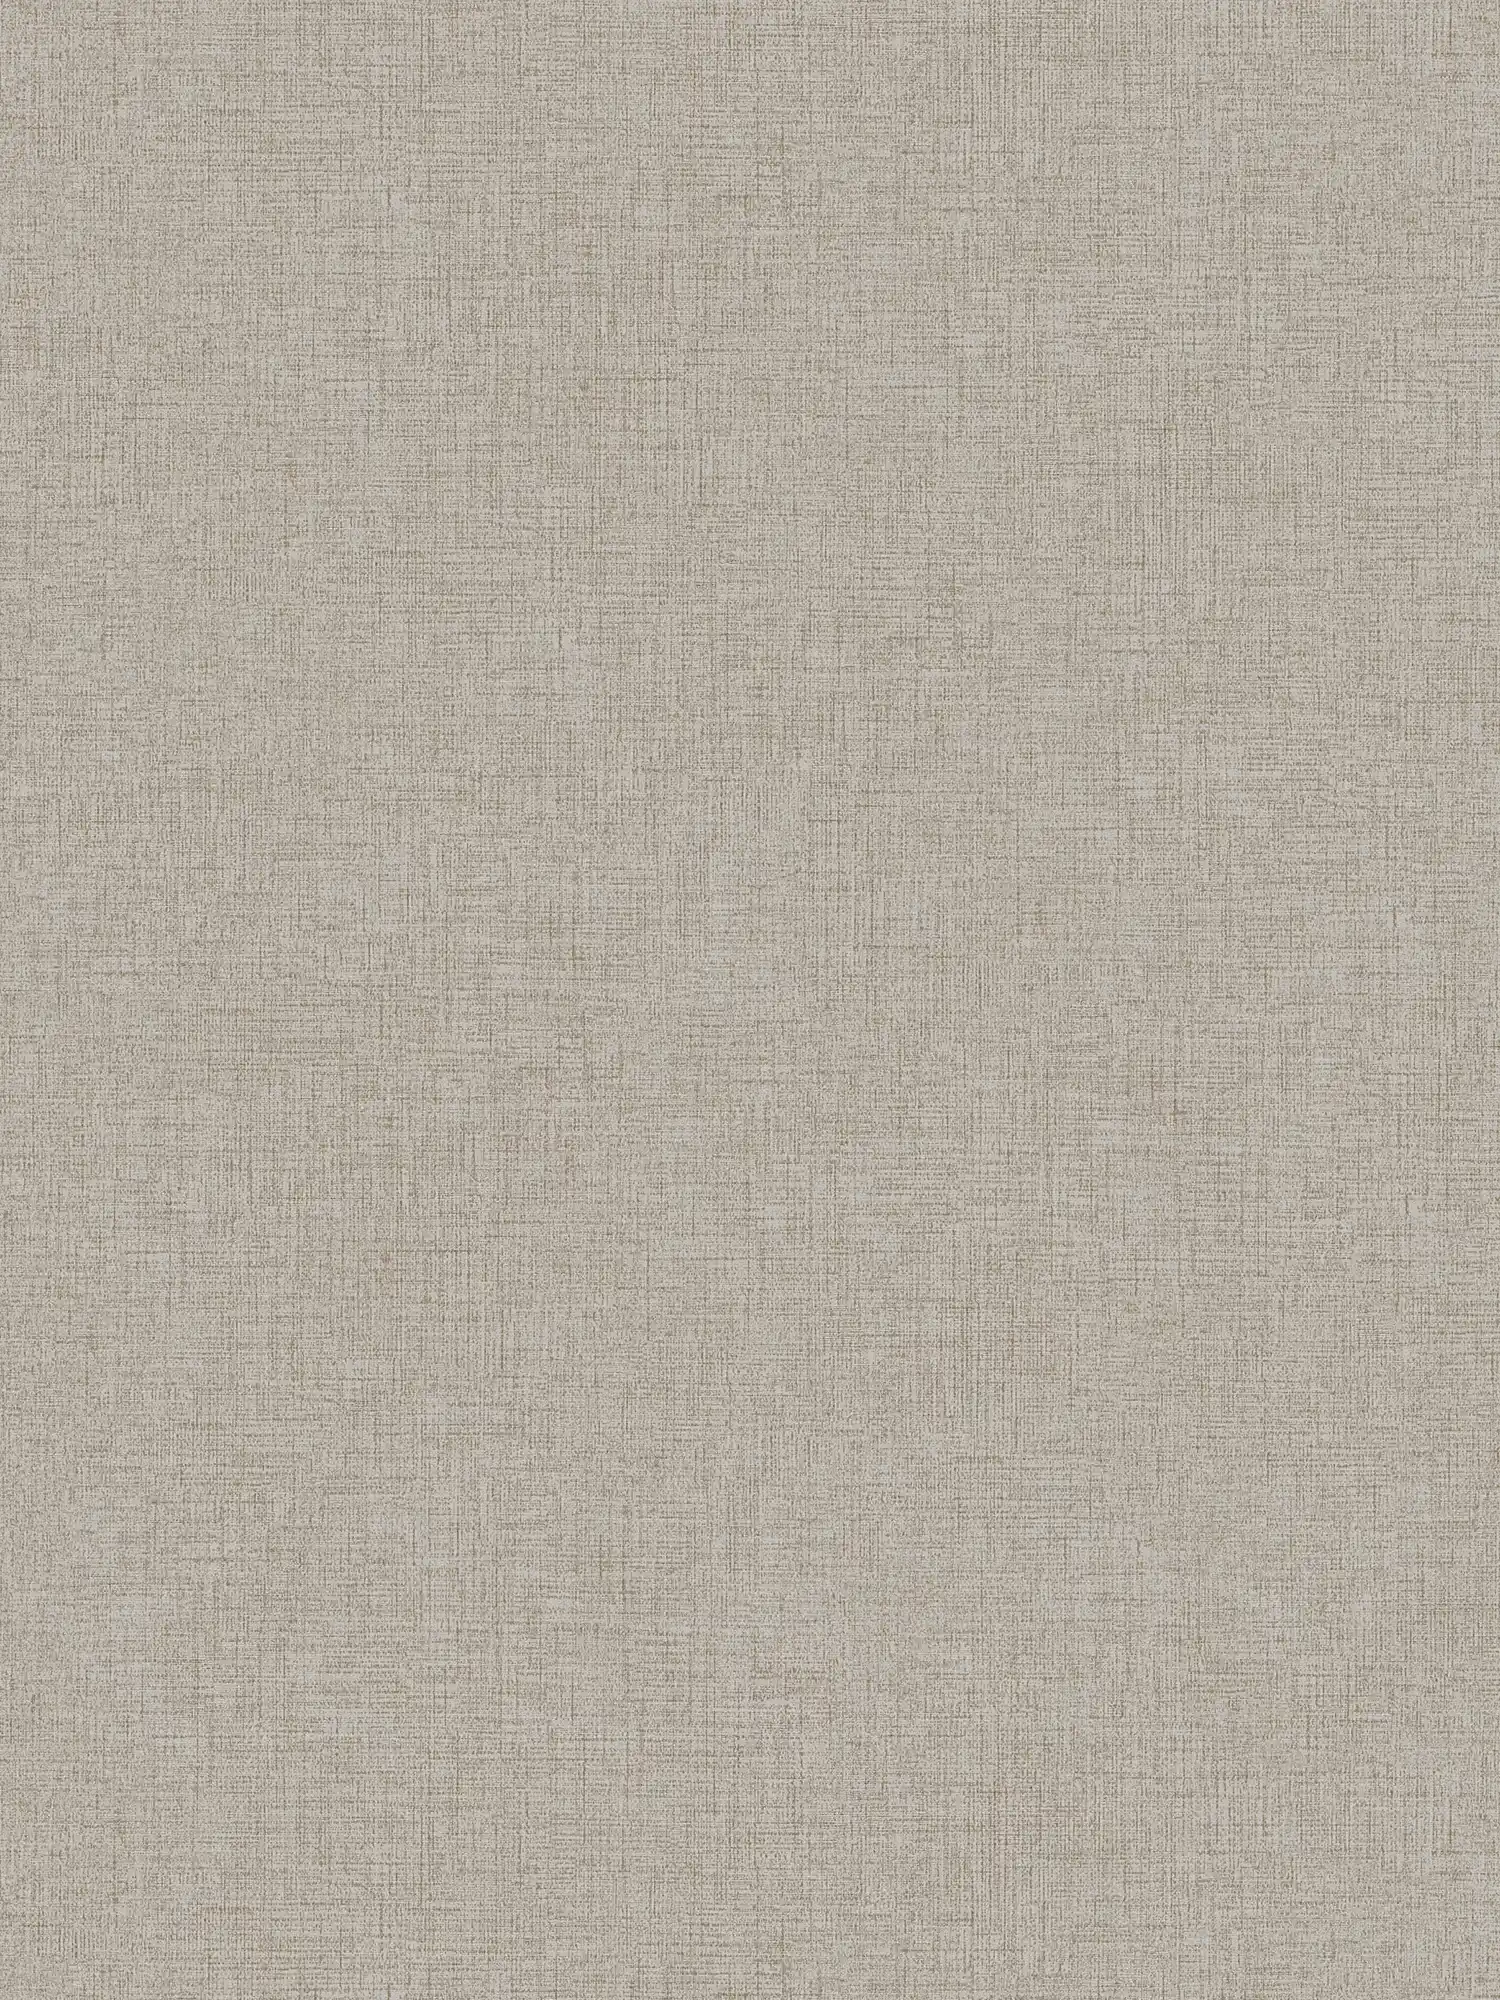 Papel pintado de lino liso, neutro - beige
